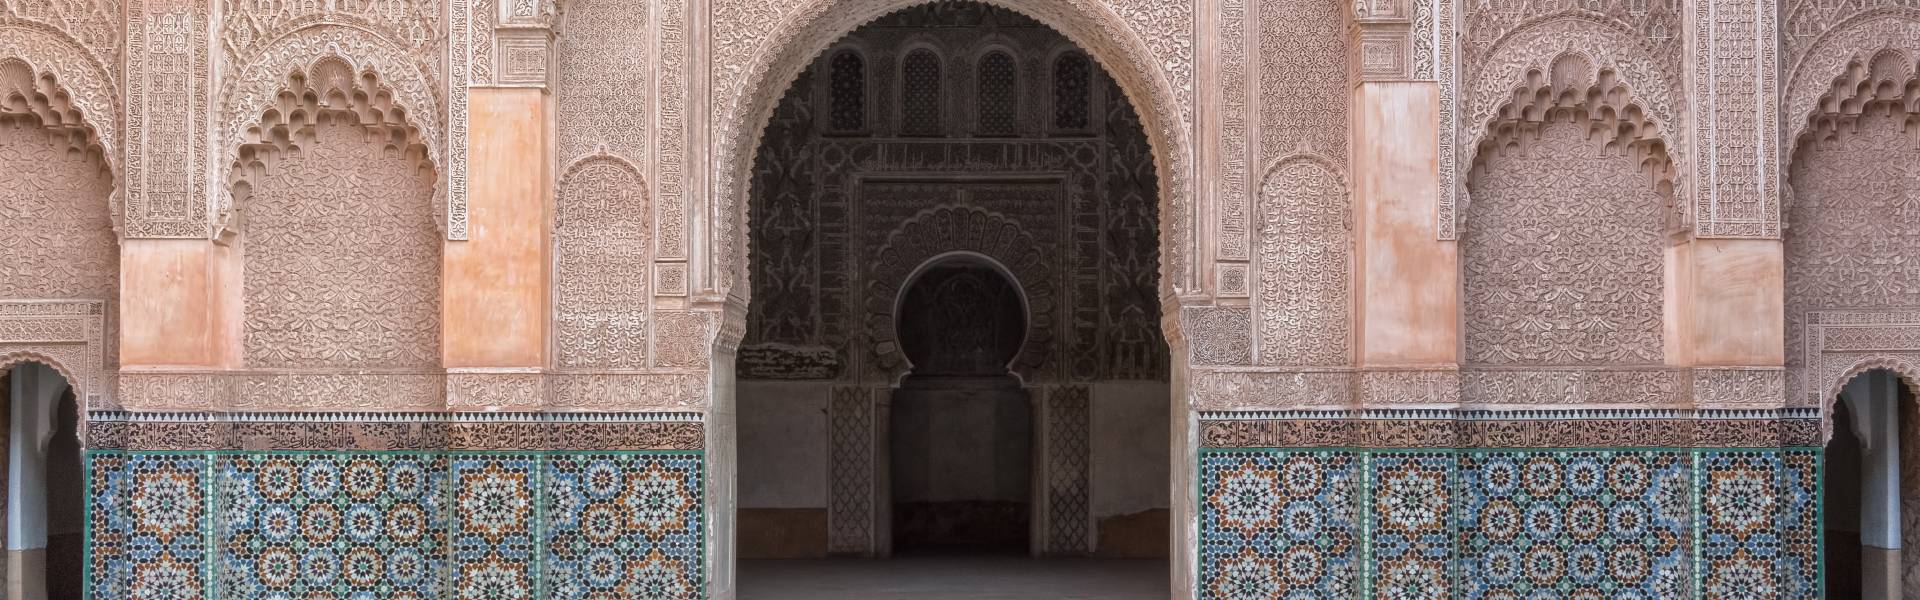 Marrakesh - Ali Ben Youssef Madrasa